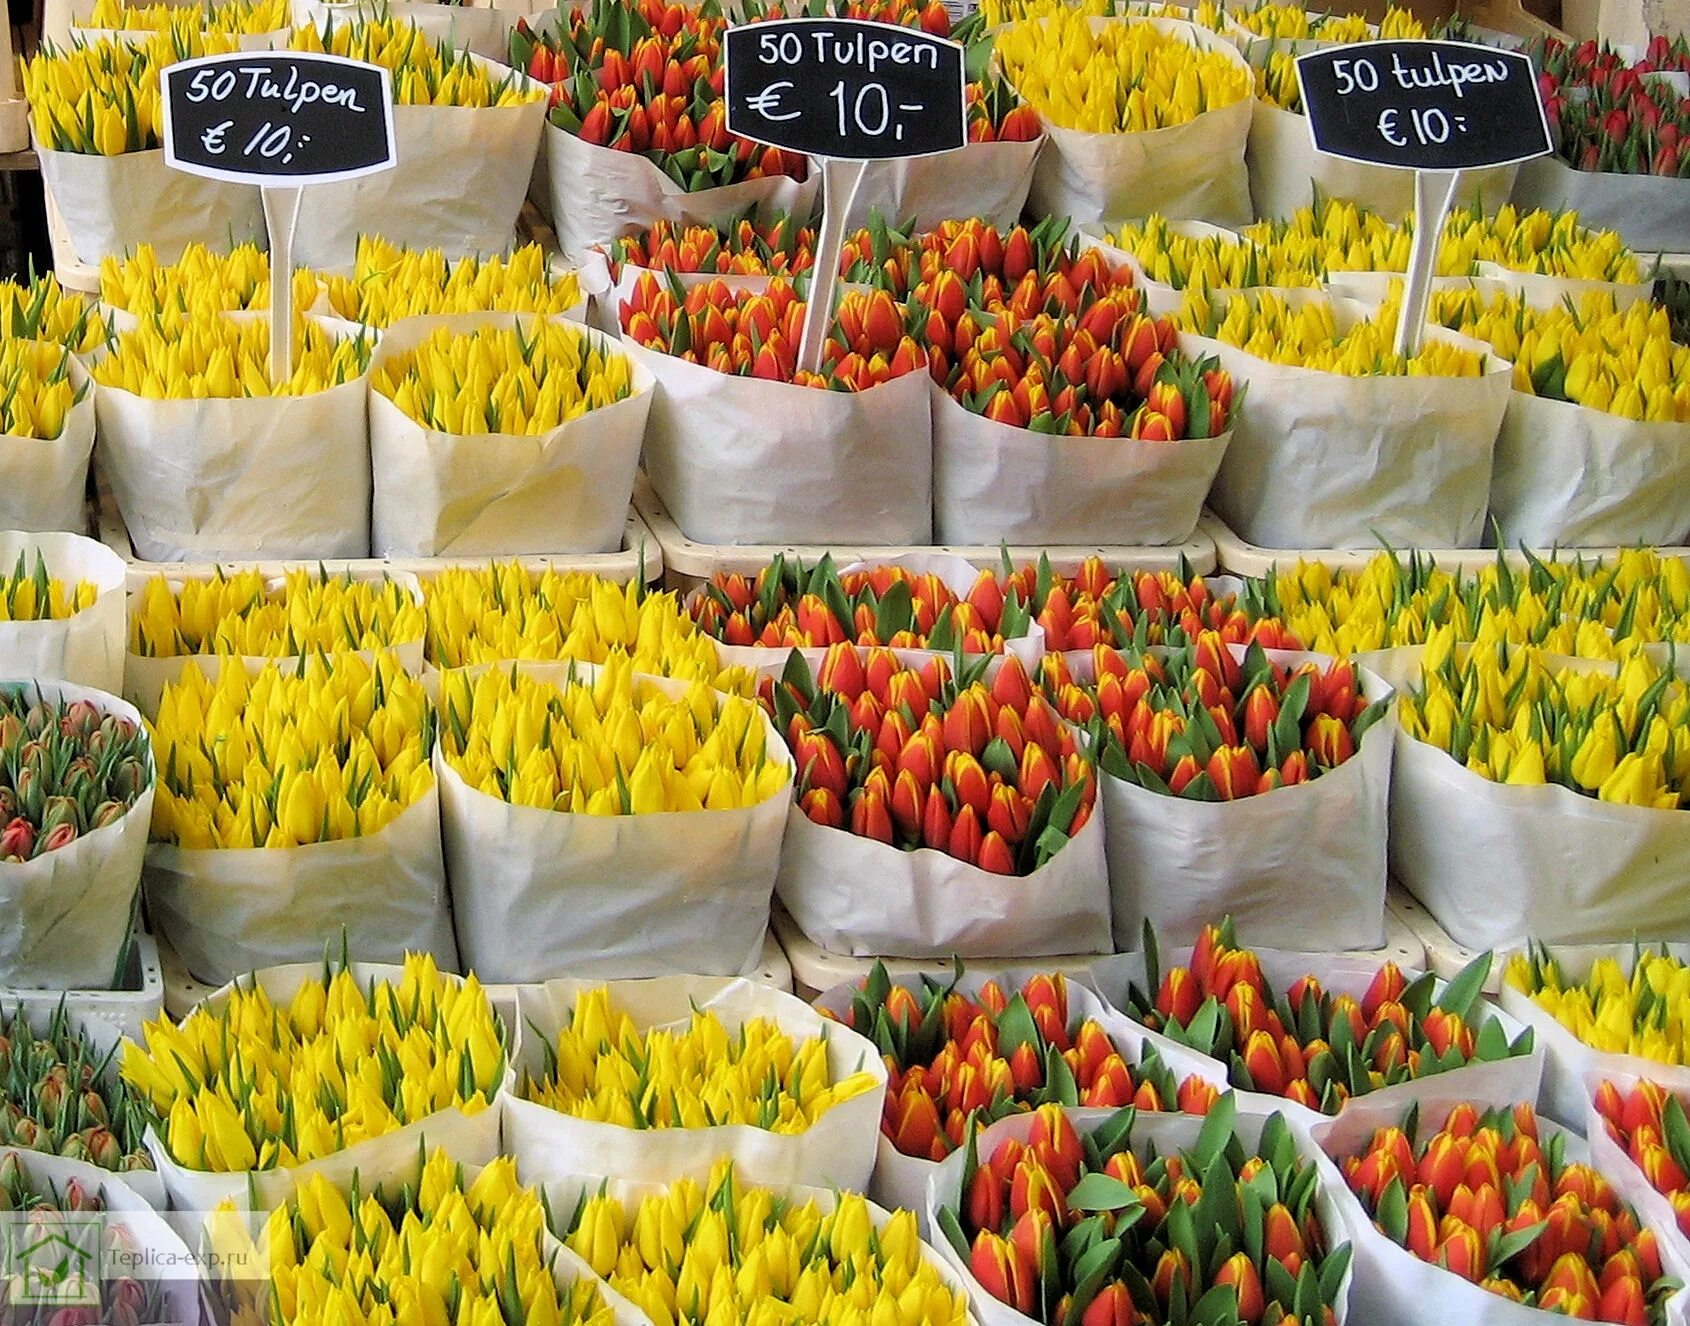 Сколько продают тюльпаны. Рынок тюльпанов в Амстердаме. Bloemenmarkt в Амстердаме. Цветочный рынок Амстердам Нидерланды. Flower Market in Amsterdam (Bloemenmarkt).